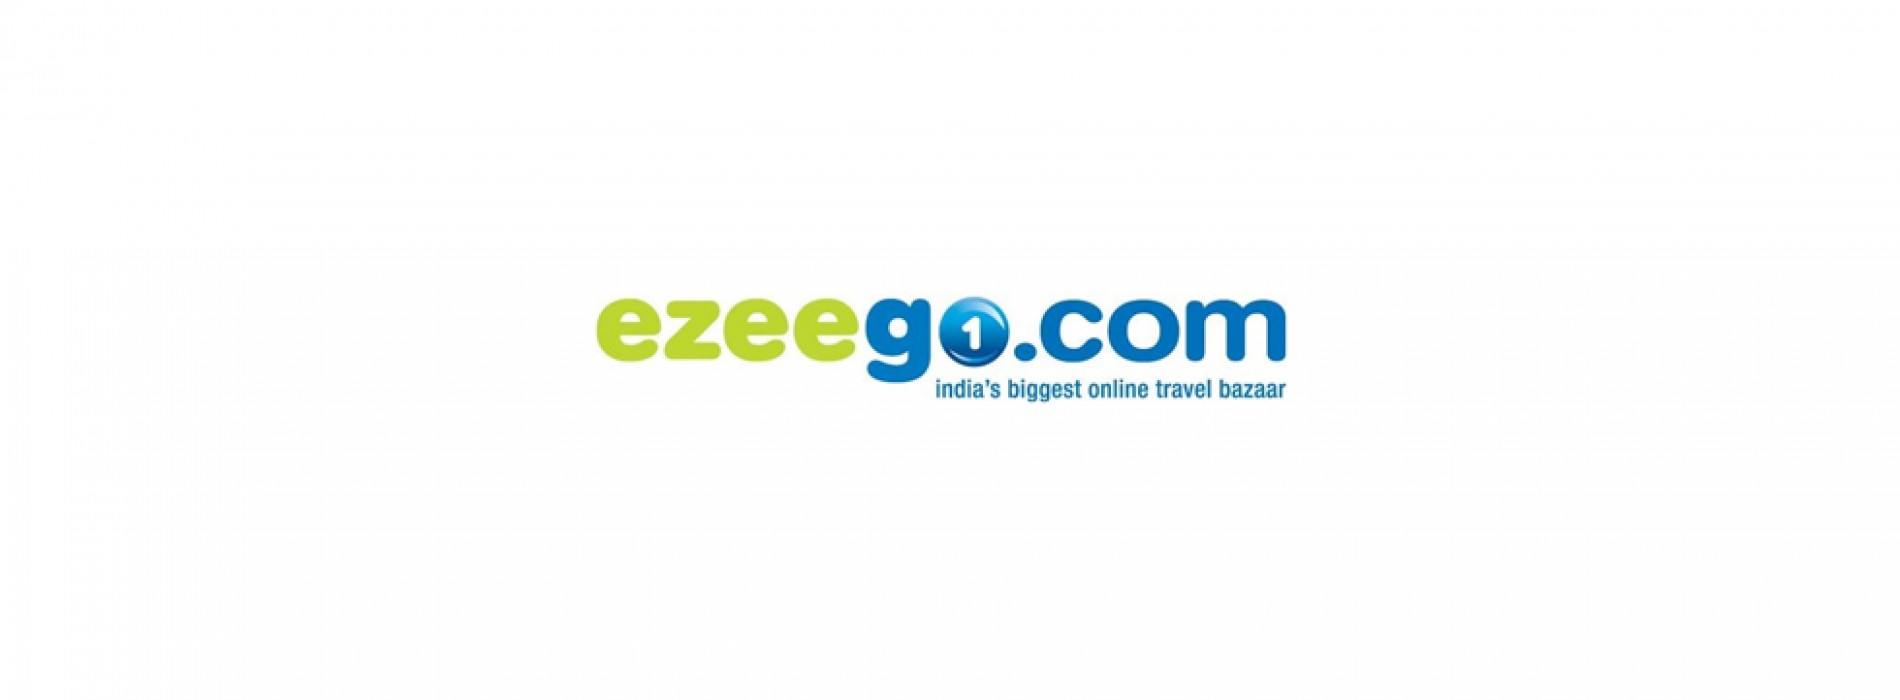 Ezeego1 introduces Advanced B2B Travel Portal for Travel Agents